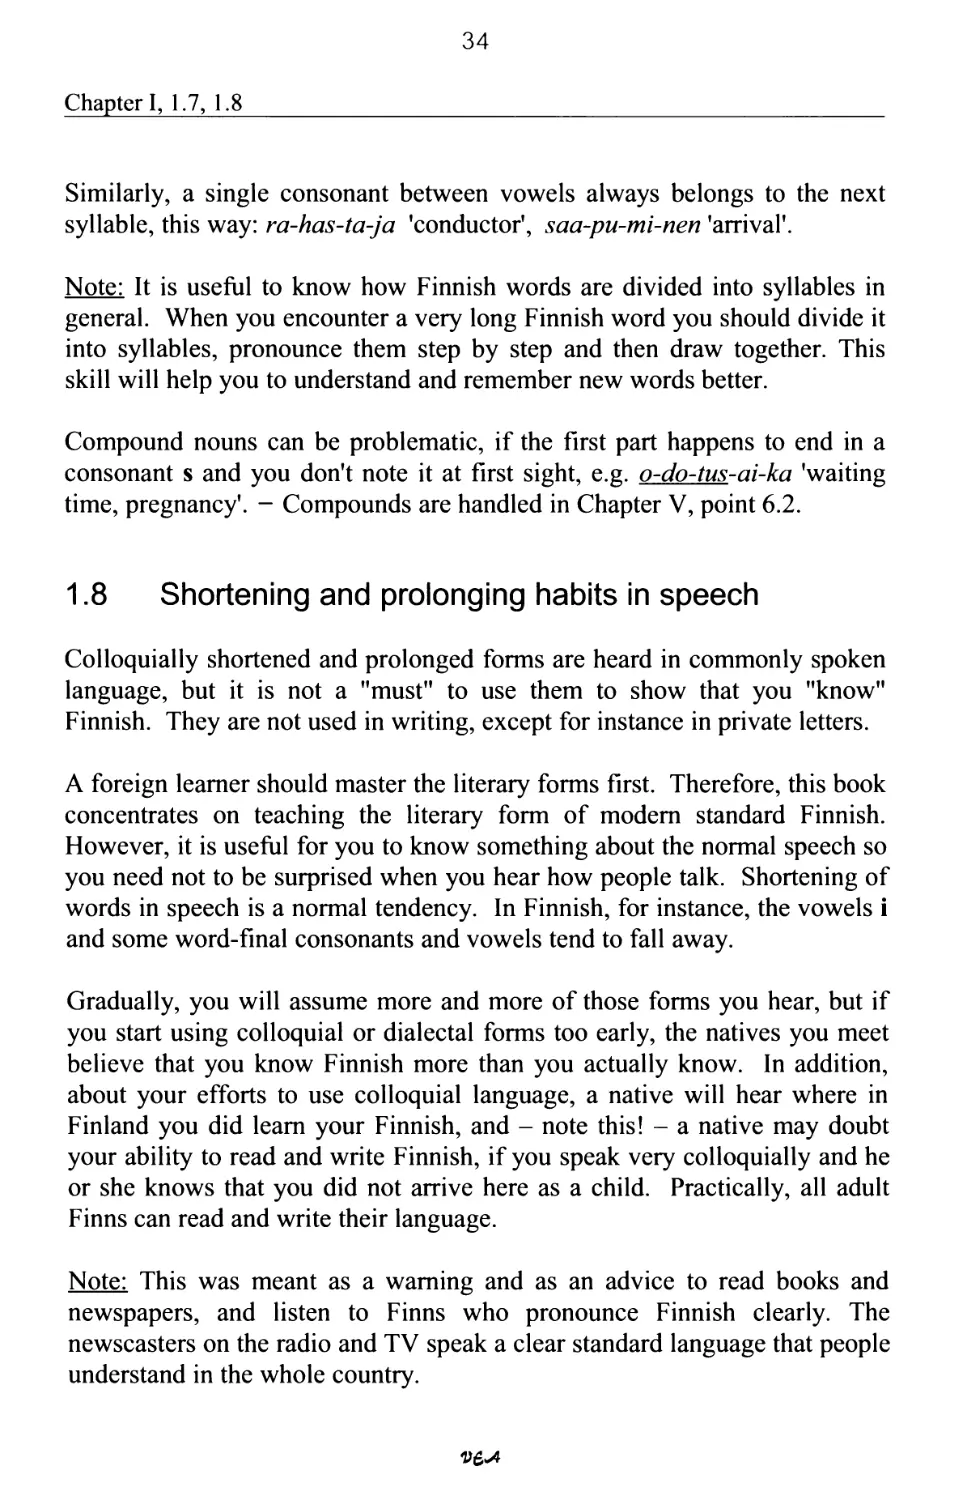 1.8 Shortening and prolonging habits in speech